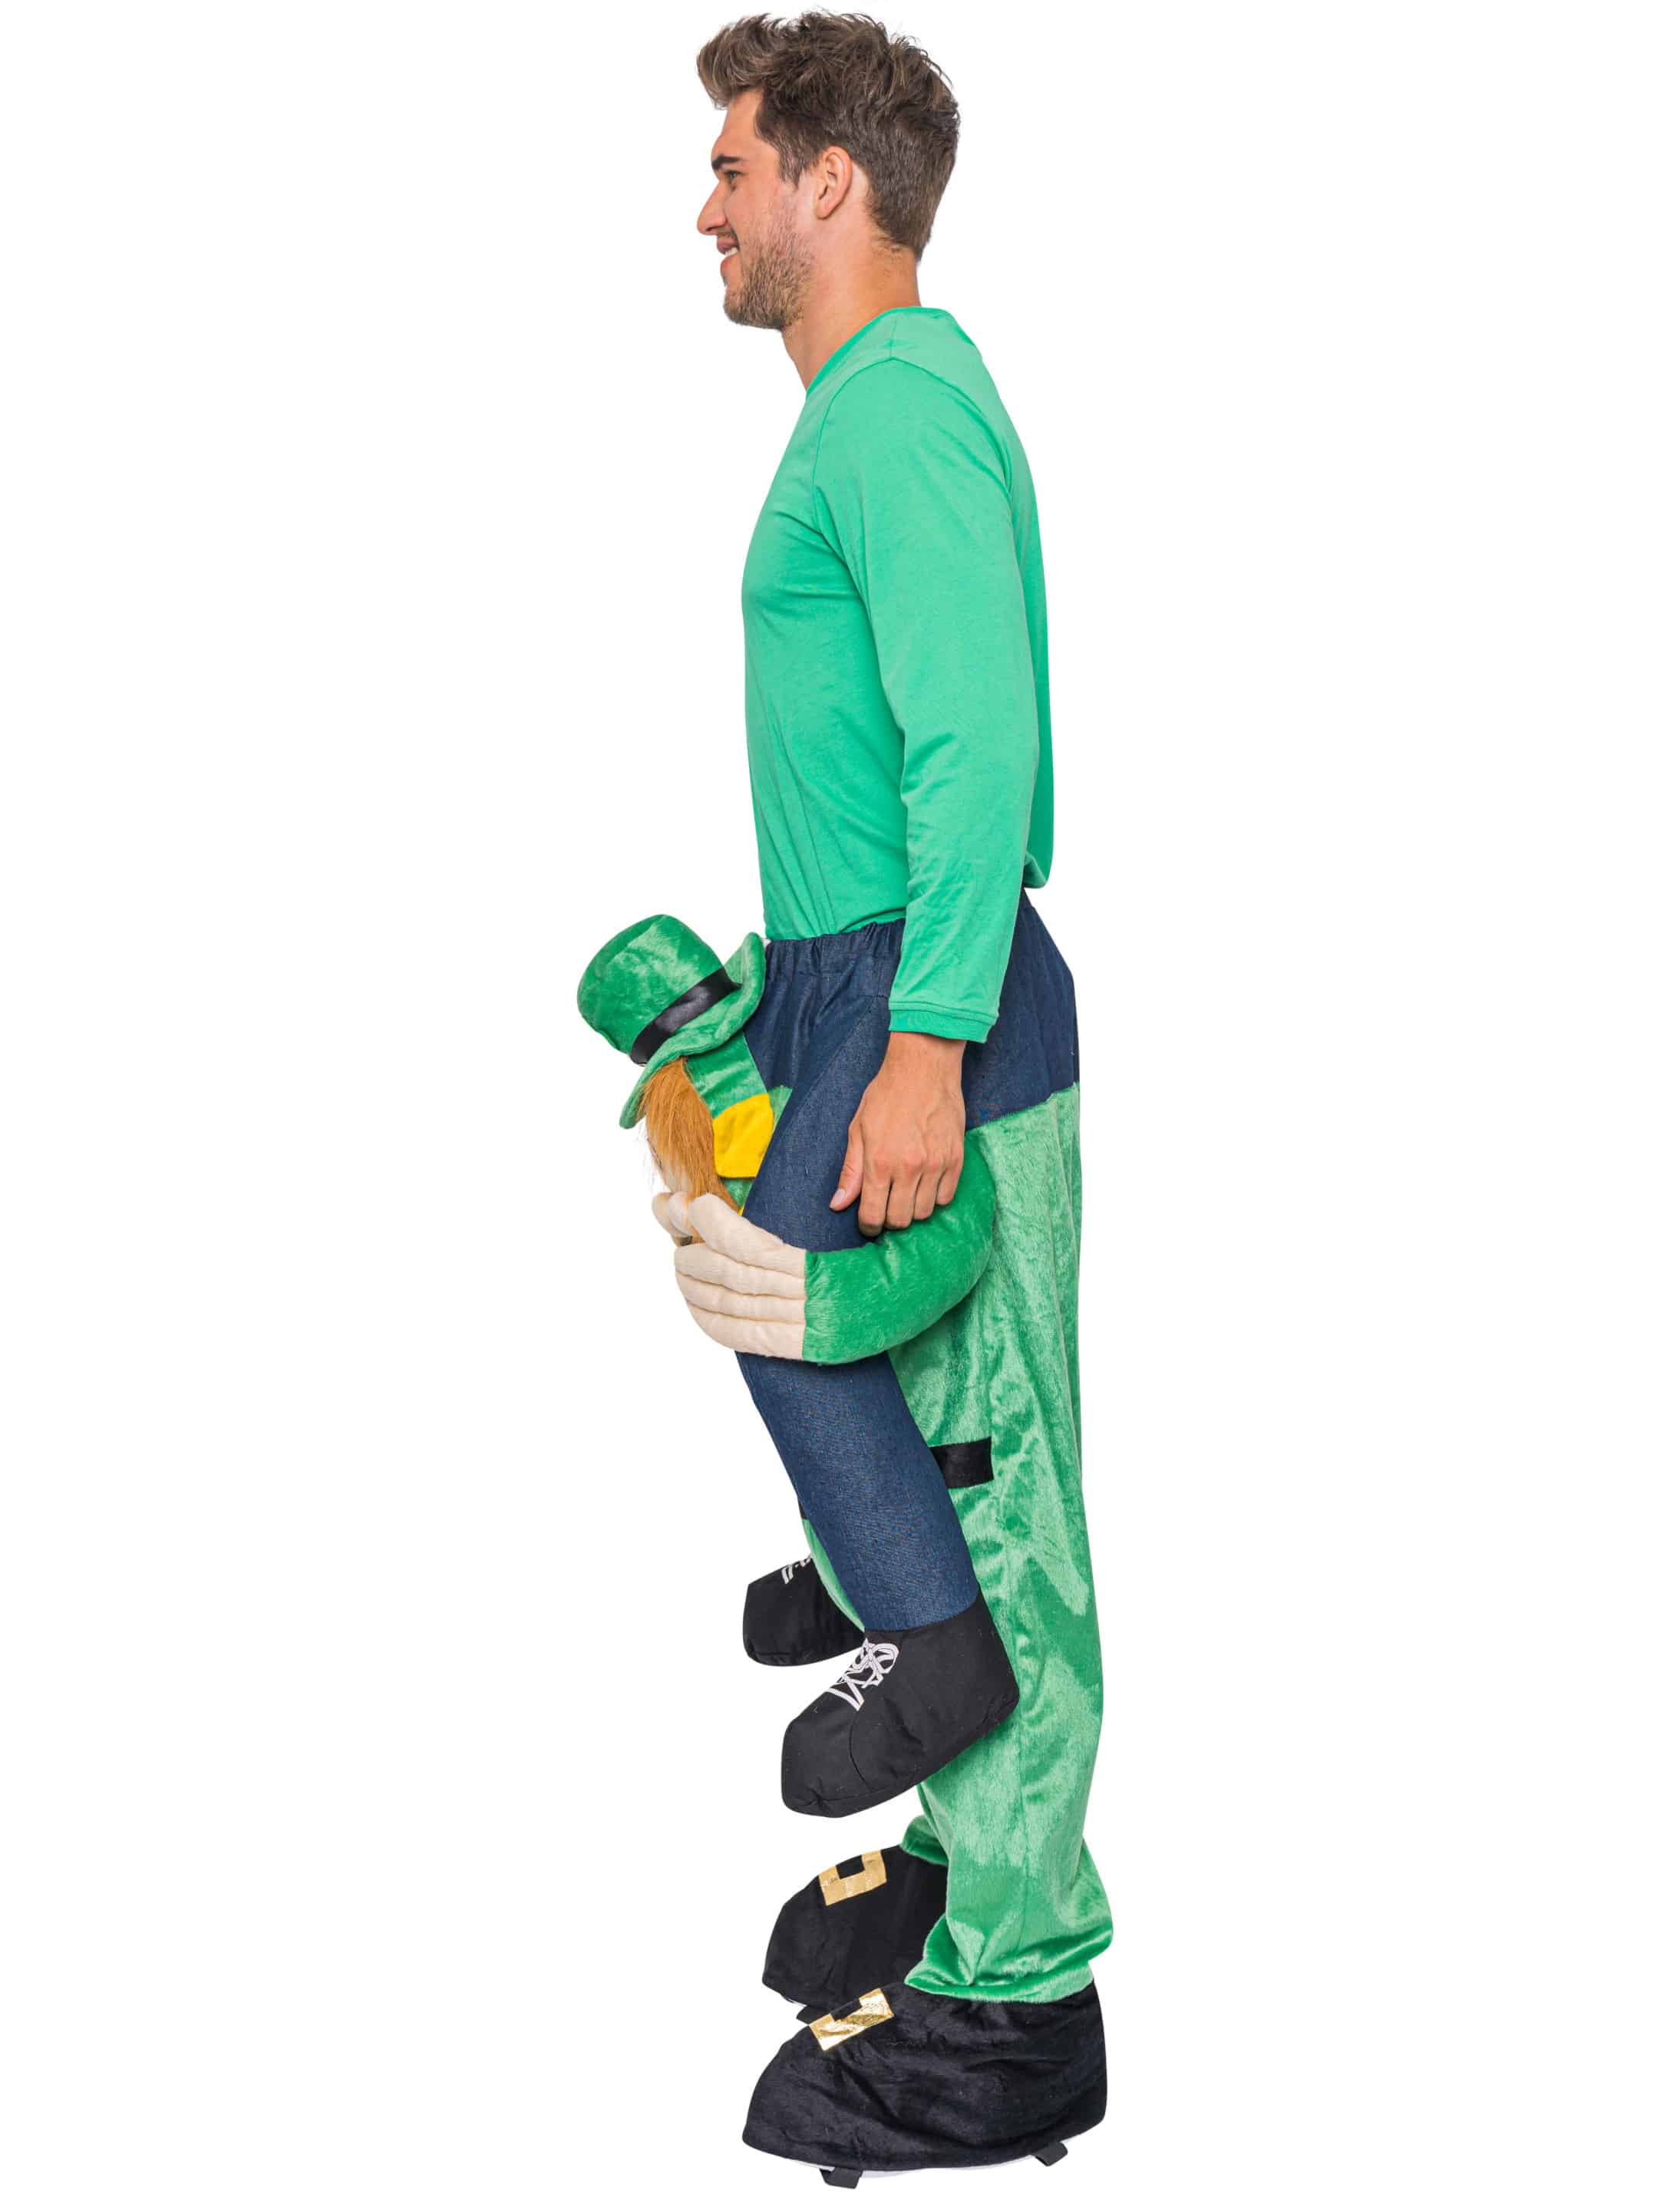 Huckepack Kostüm Kobold grün one size